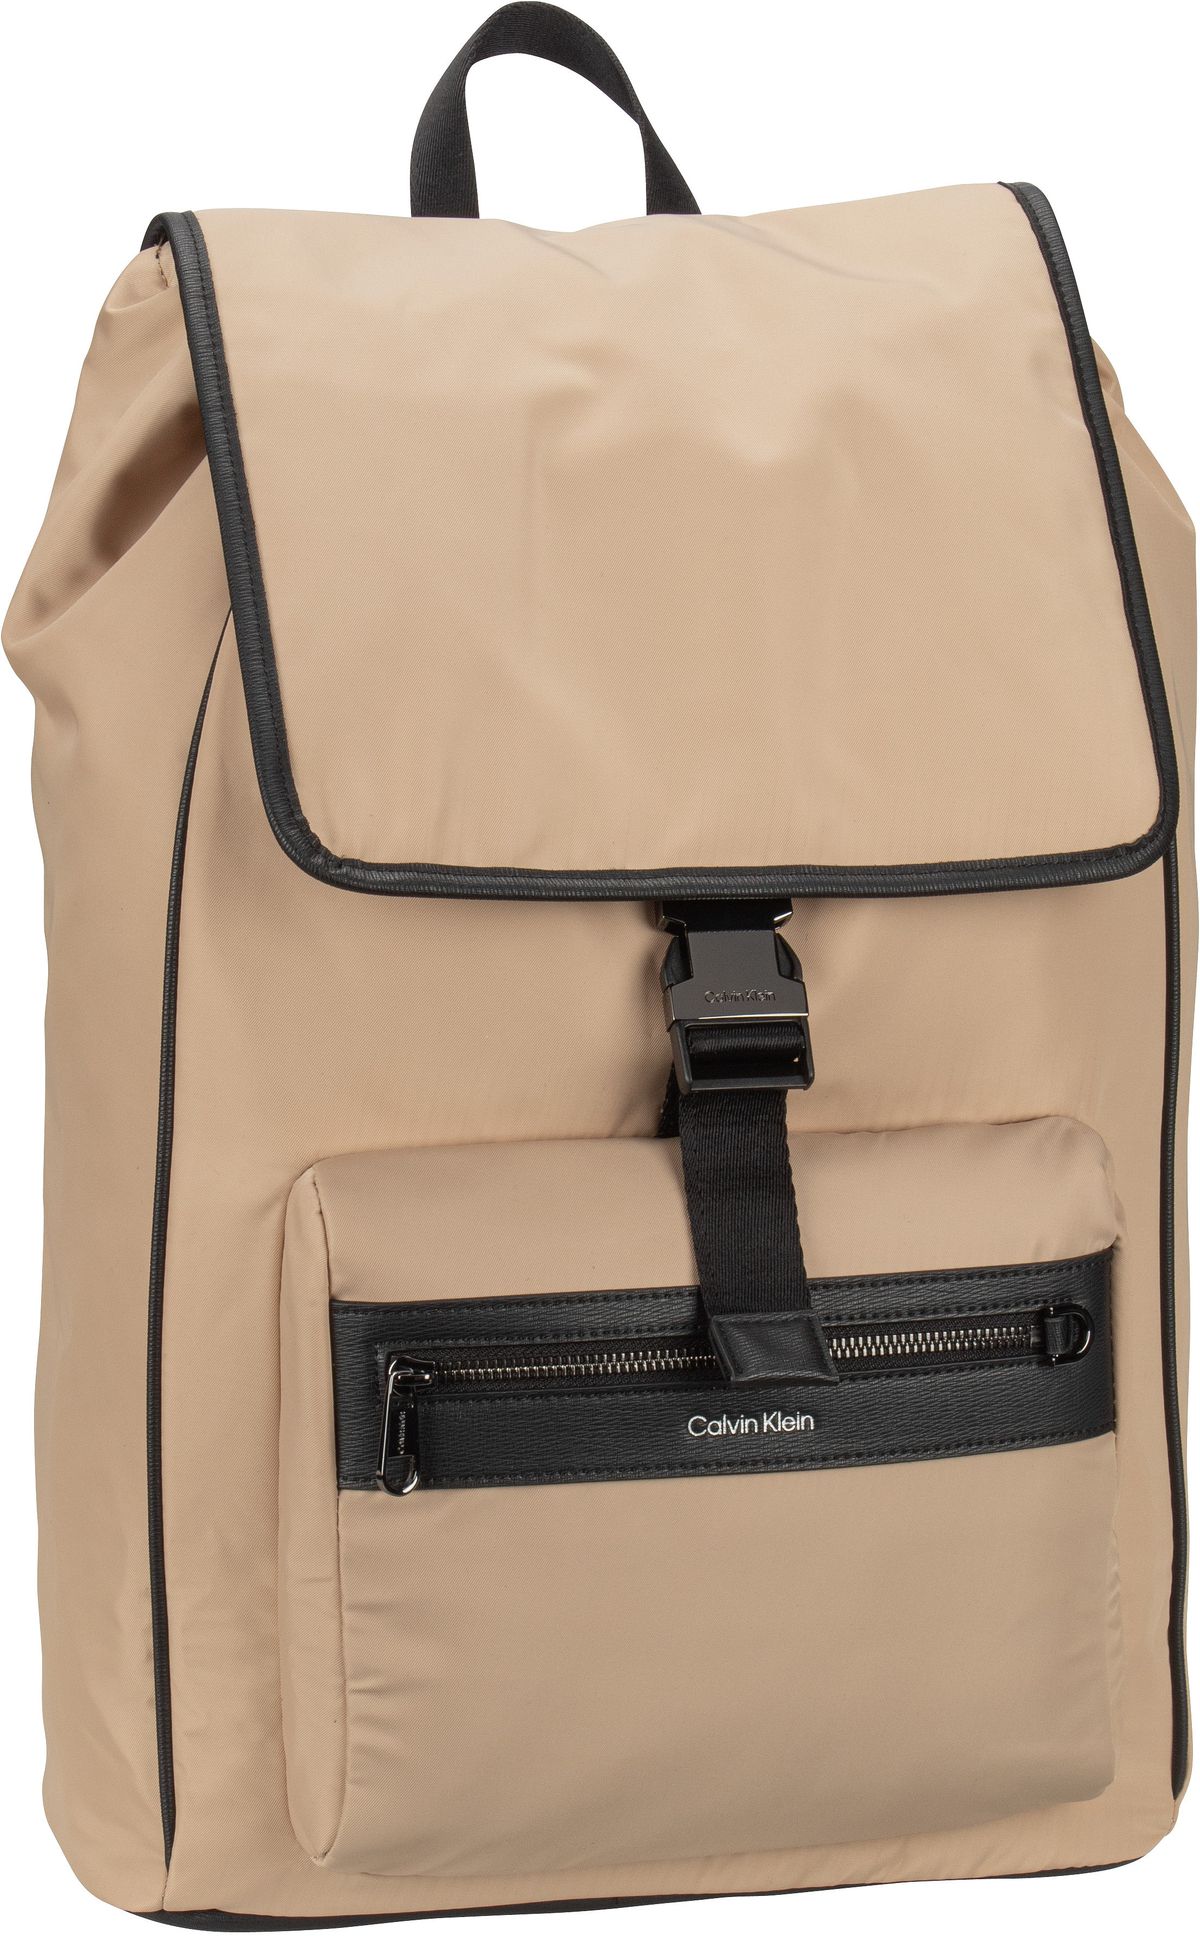 Calvin Klein  CK Elevated Flap Backpack PSP23 - Rucksack - Beige (Tavertine)